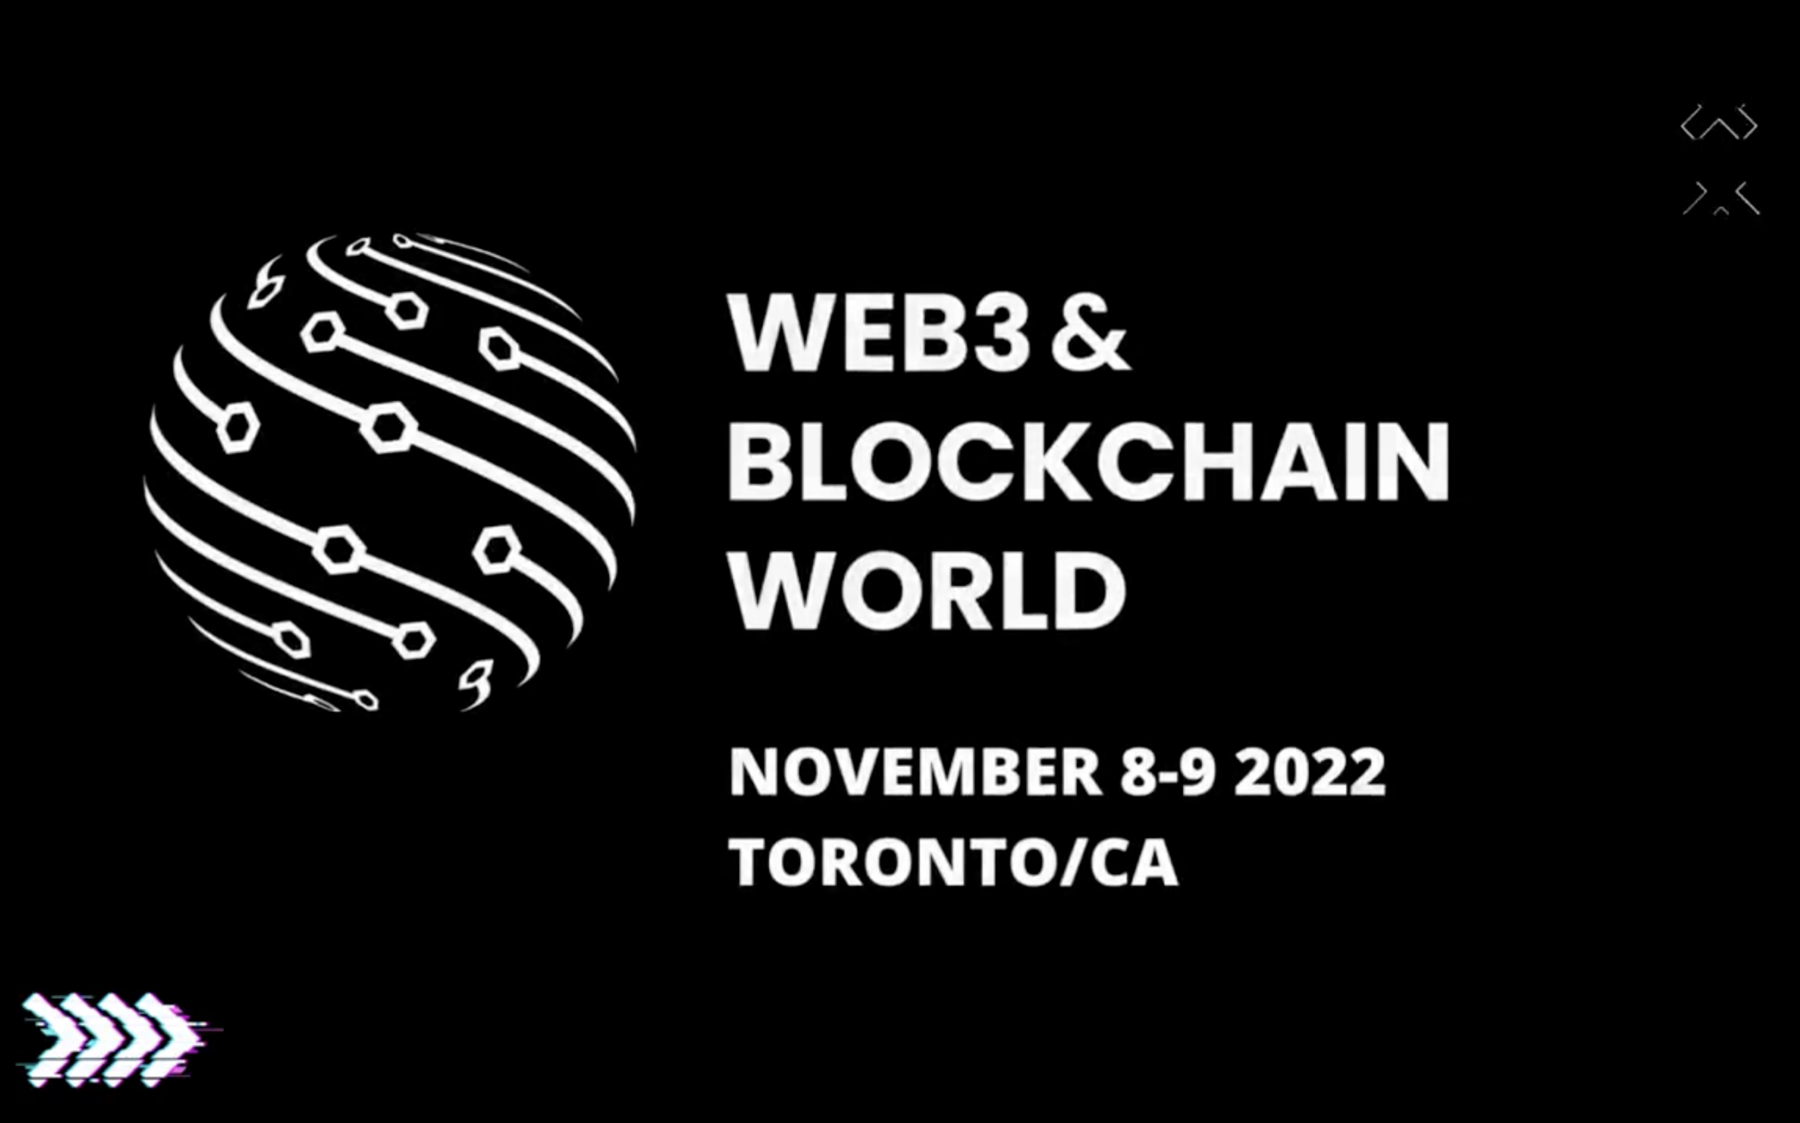 Web3 & Blockchain World (W3B)